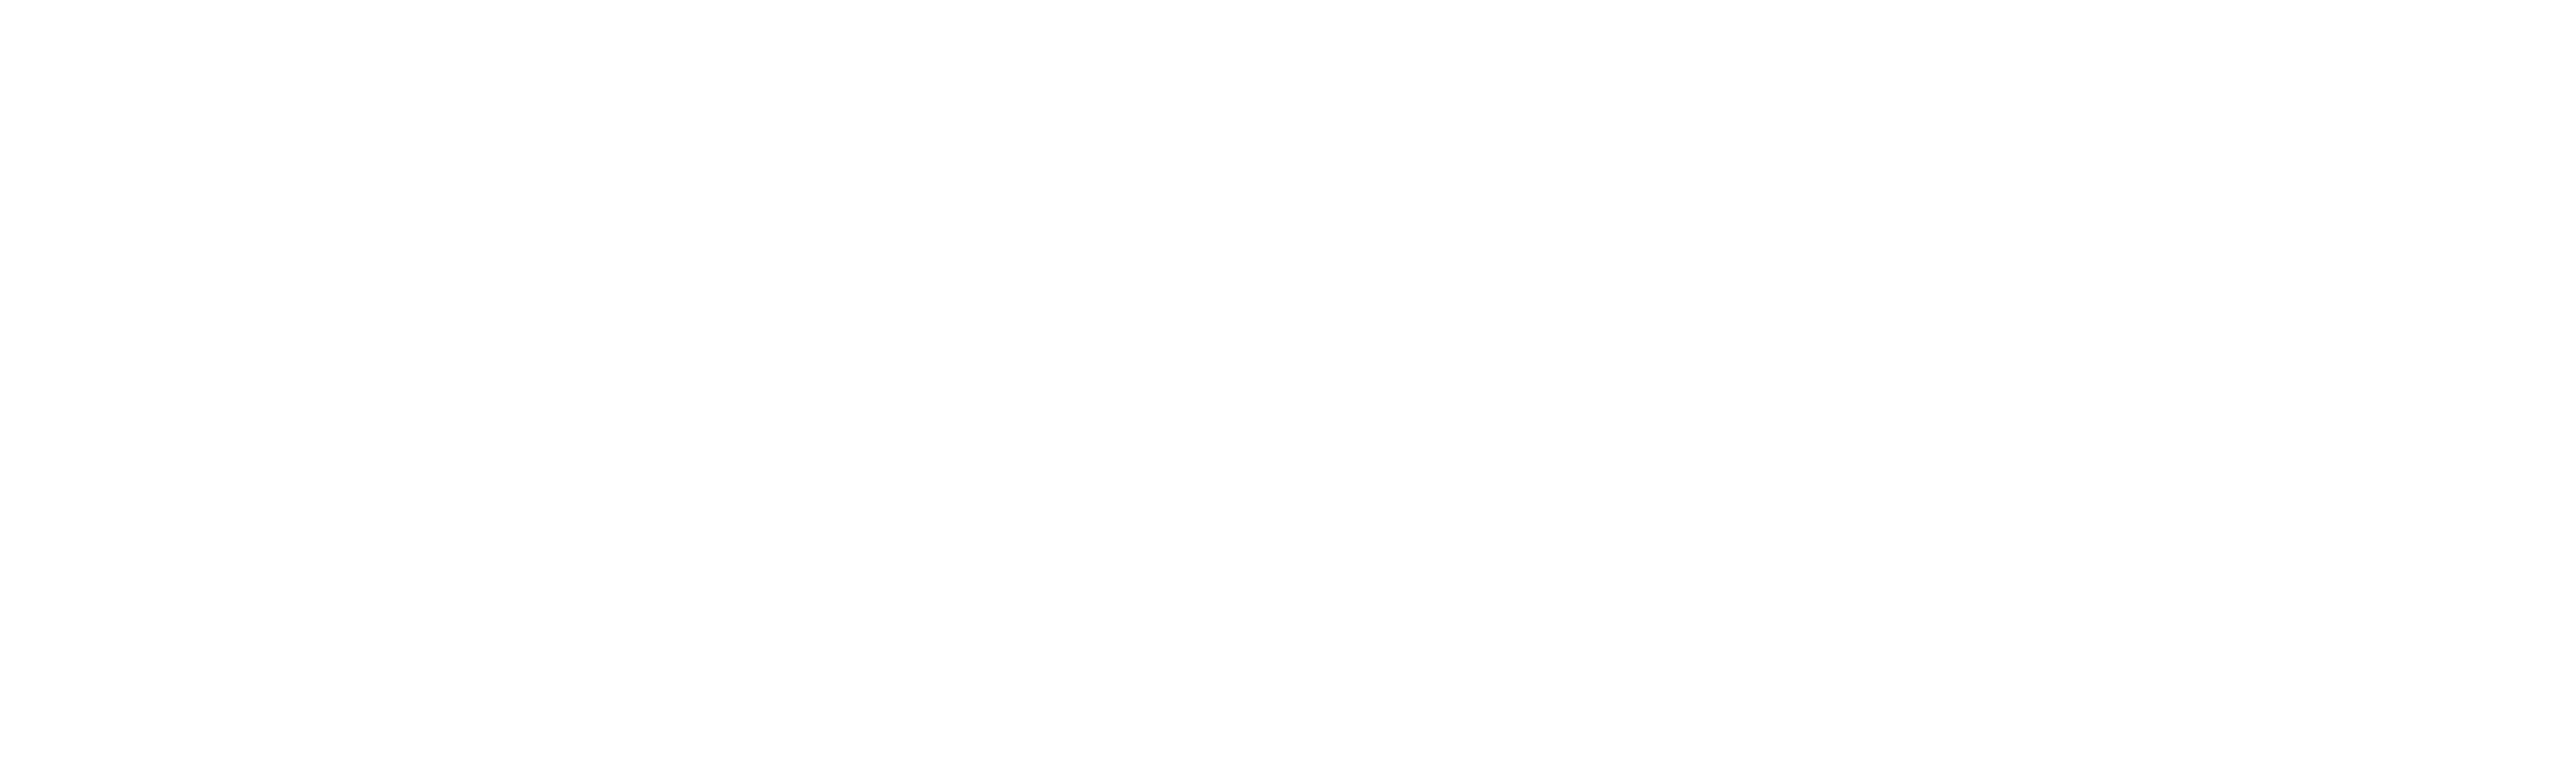 eraserheads logo